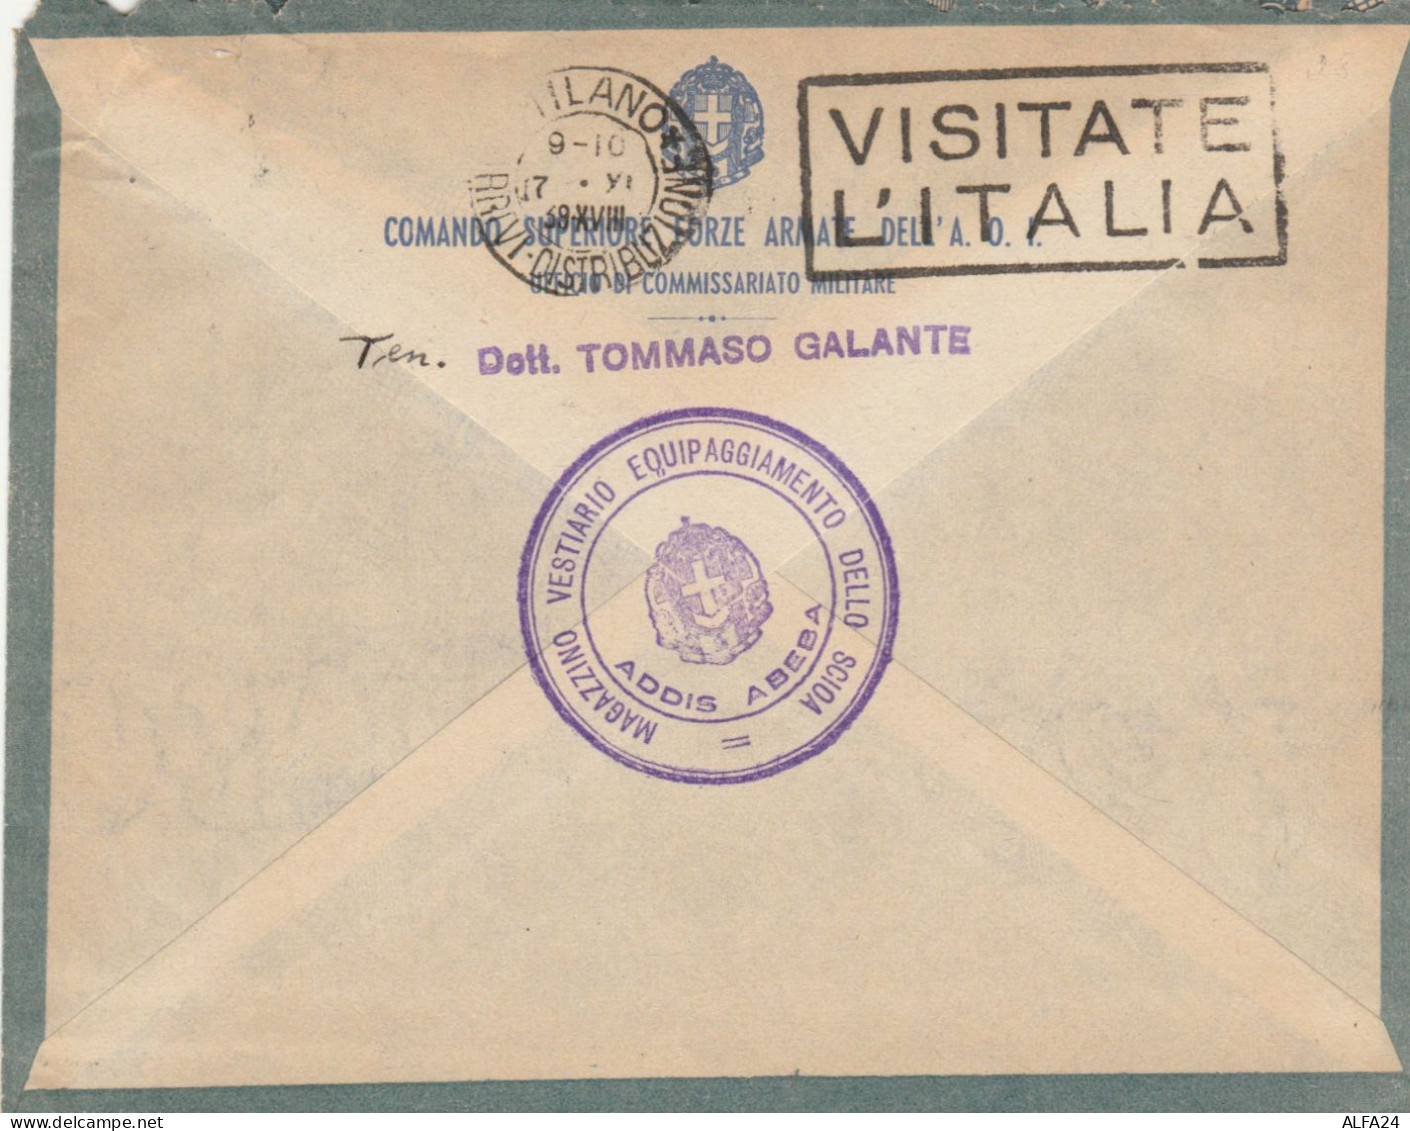 LETTERA 1939 1L. AFRICA ORIENTALE+75 ERITREA TIMBRO ADDIS ABEBA -COMASNDO FA AOI (KP95 - Afrique Orientale Italienne